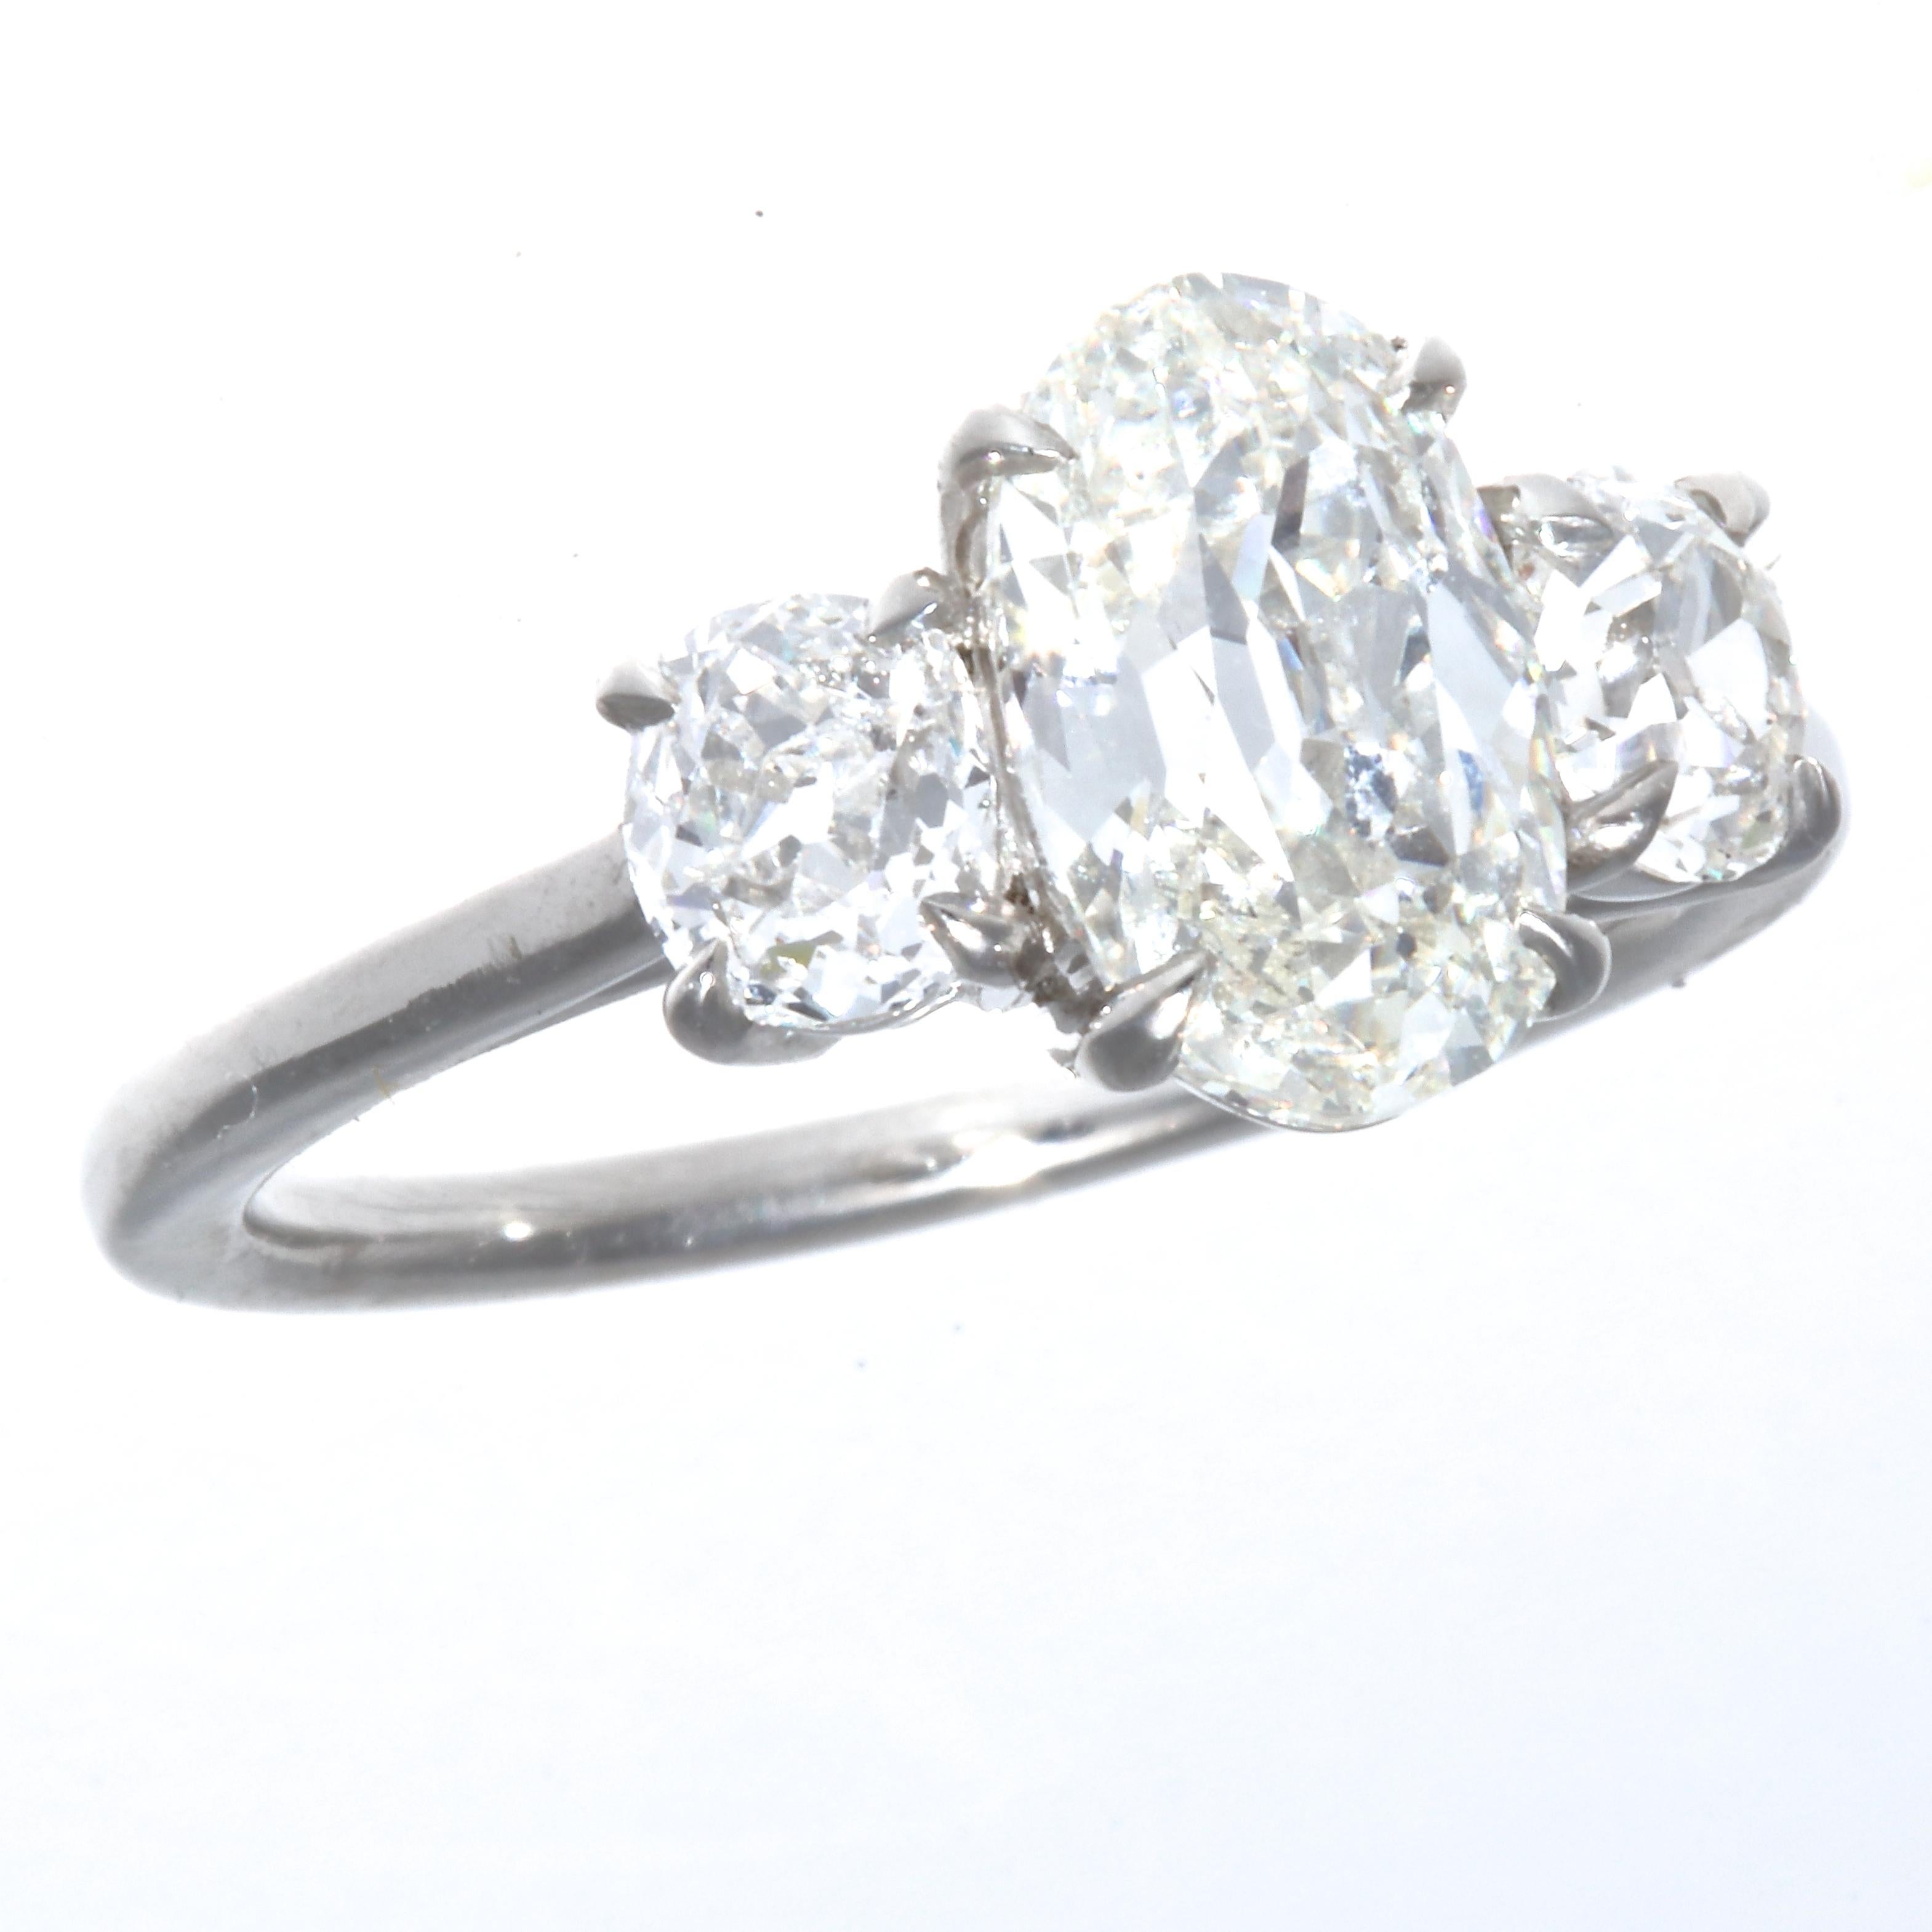 1.64 carat diamond ring